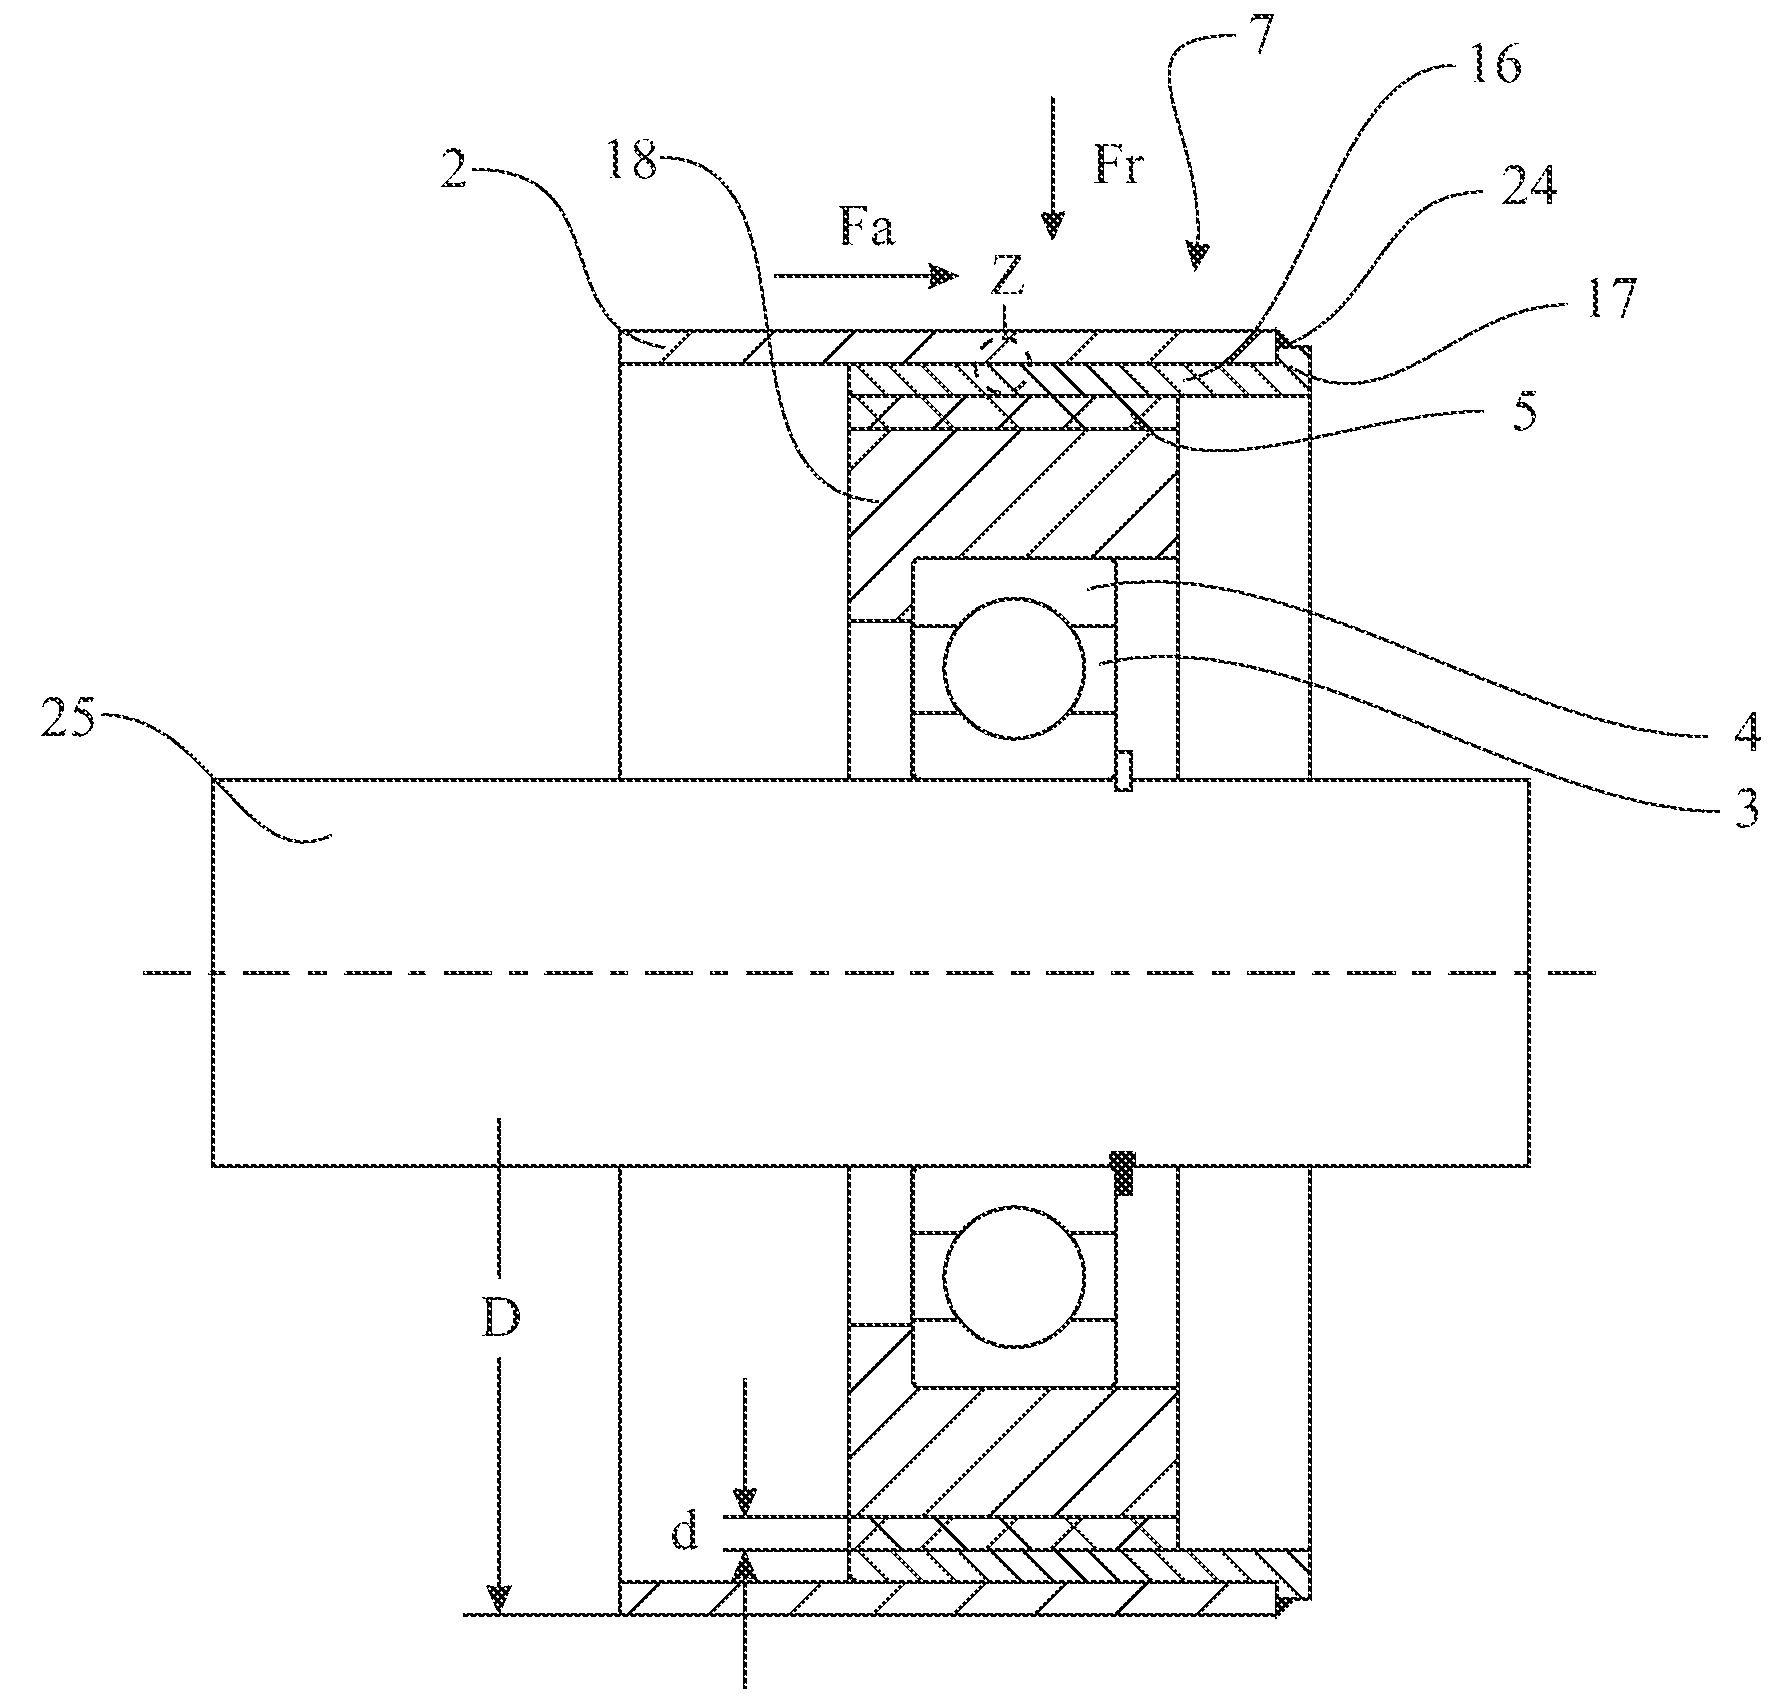 Bearing arrangement for a tension roller